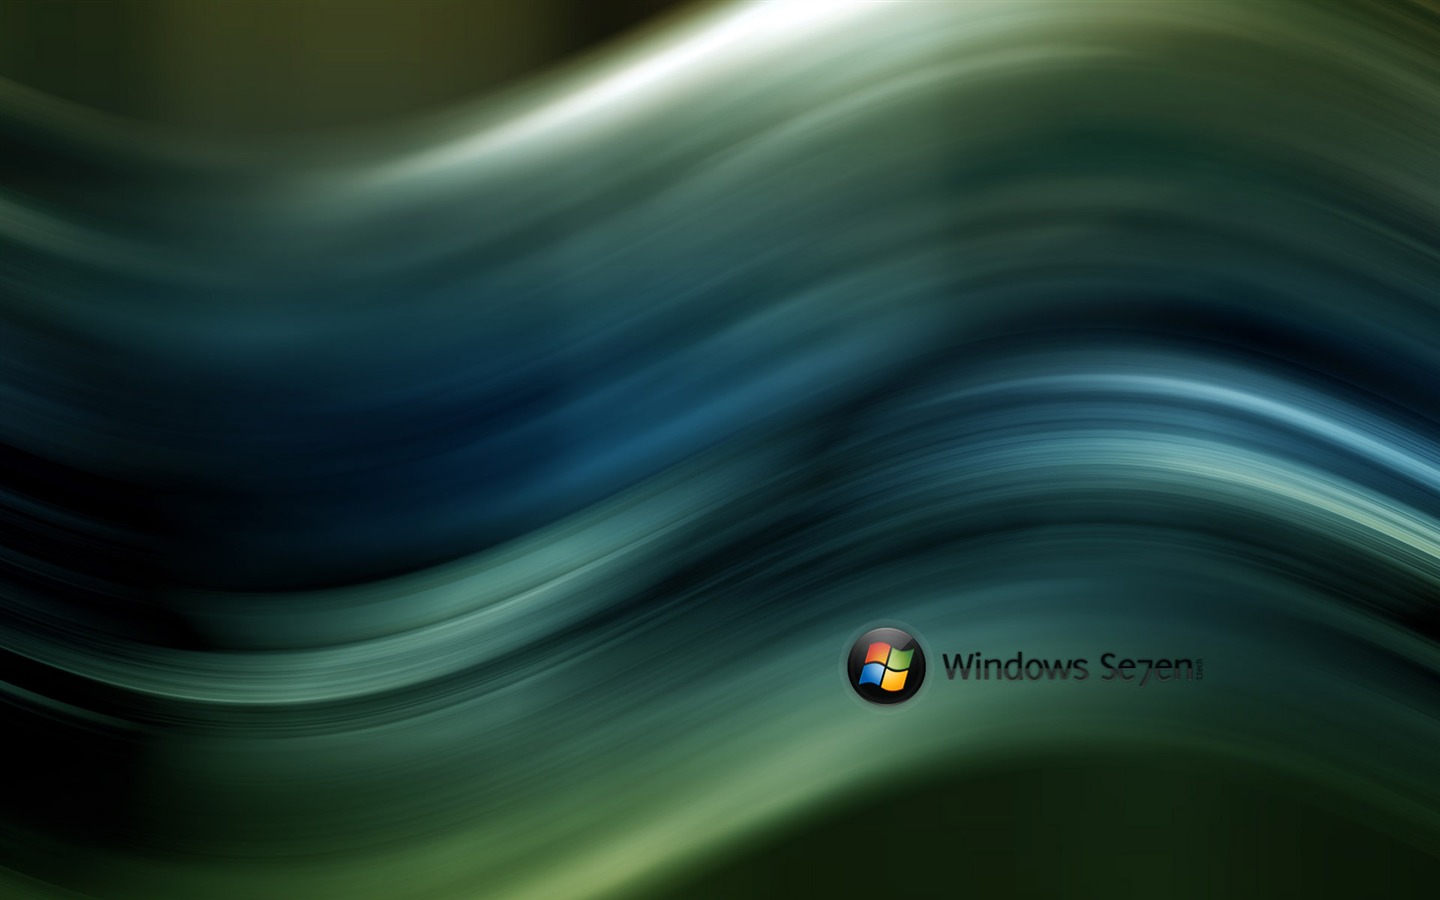 Windows7 wallpaper #17 - 1440x900